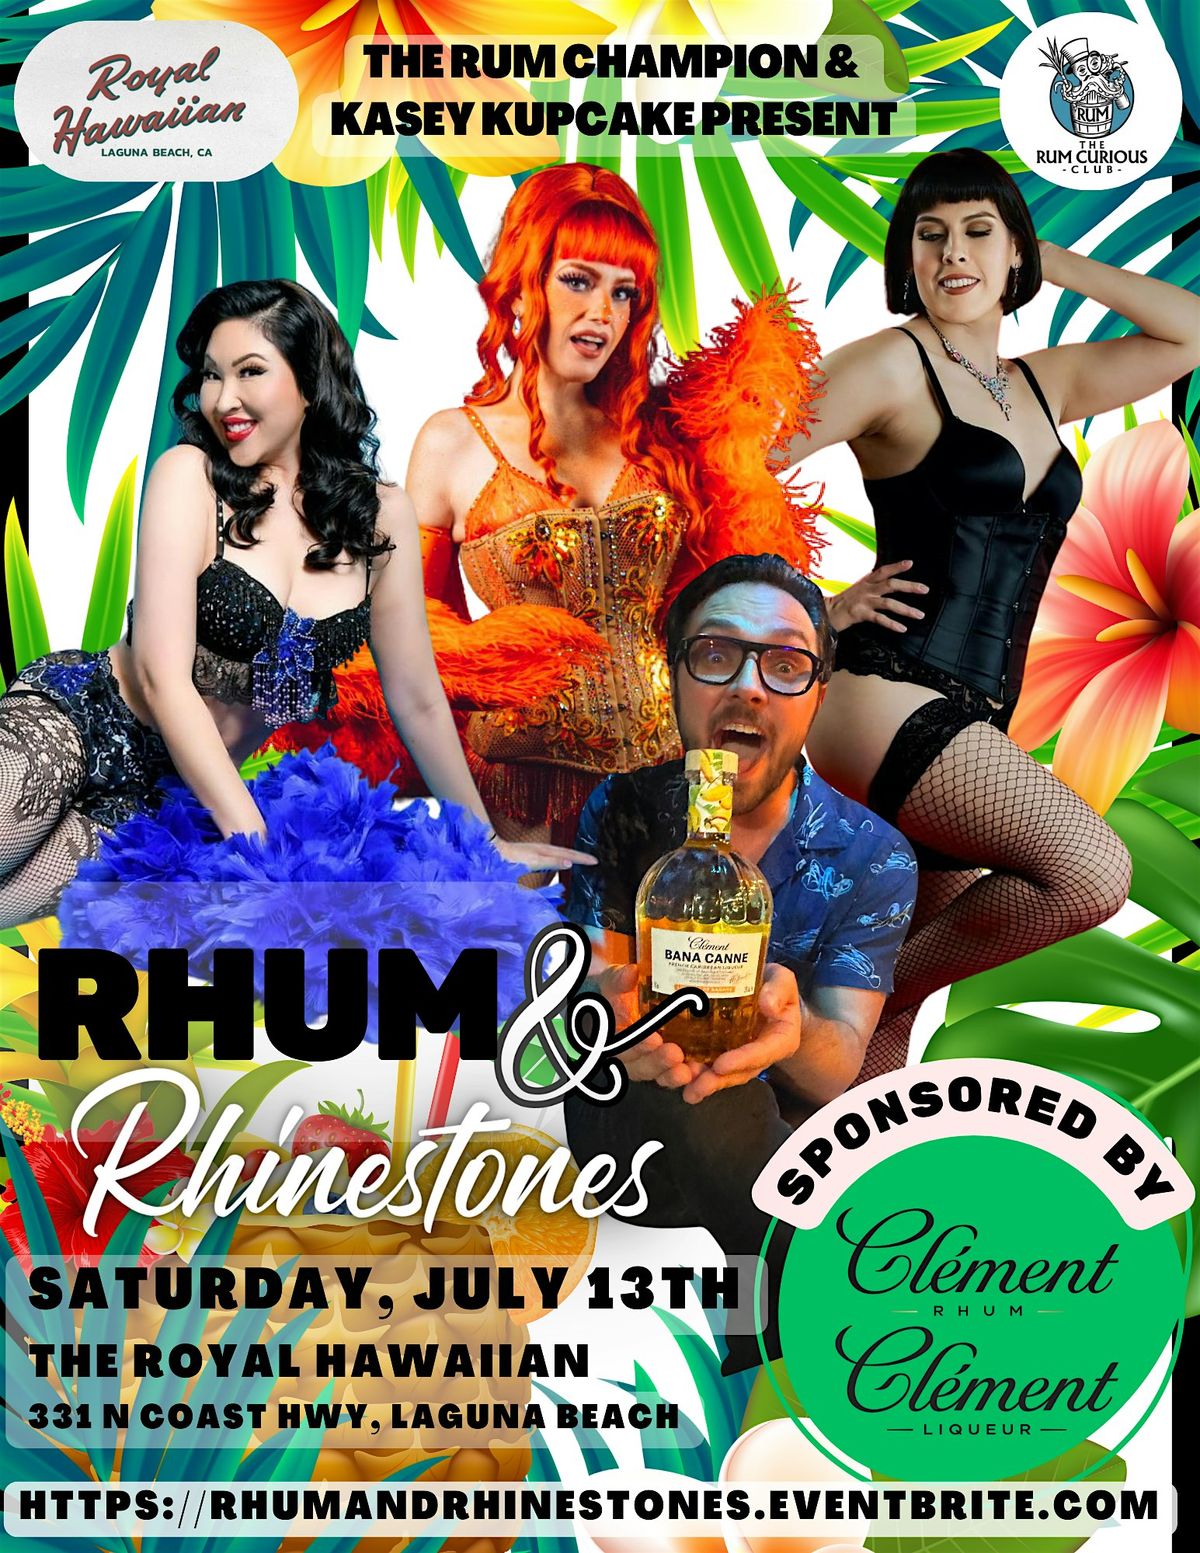 Rhum & Rhinestones- an exclusive tasting event